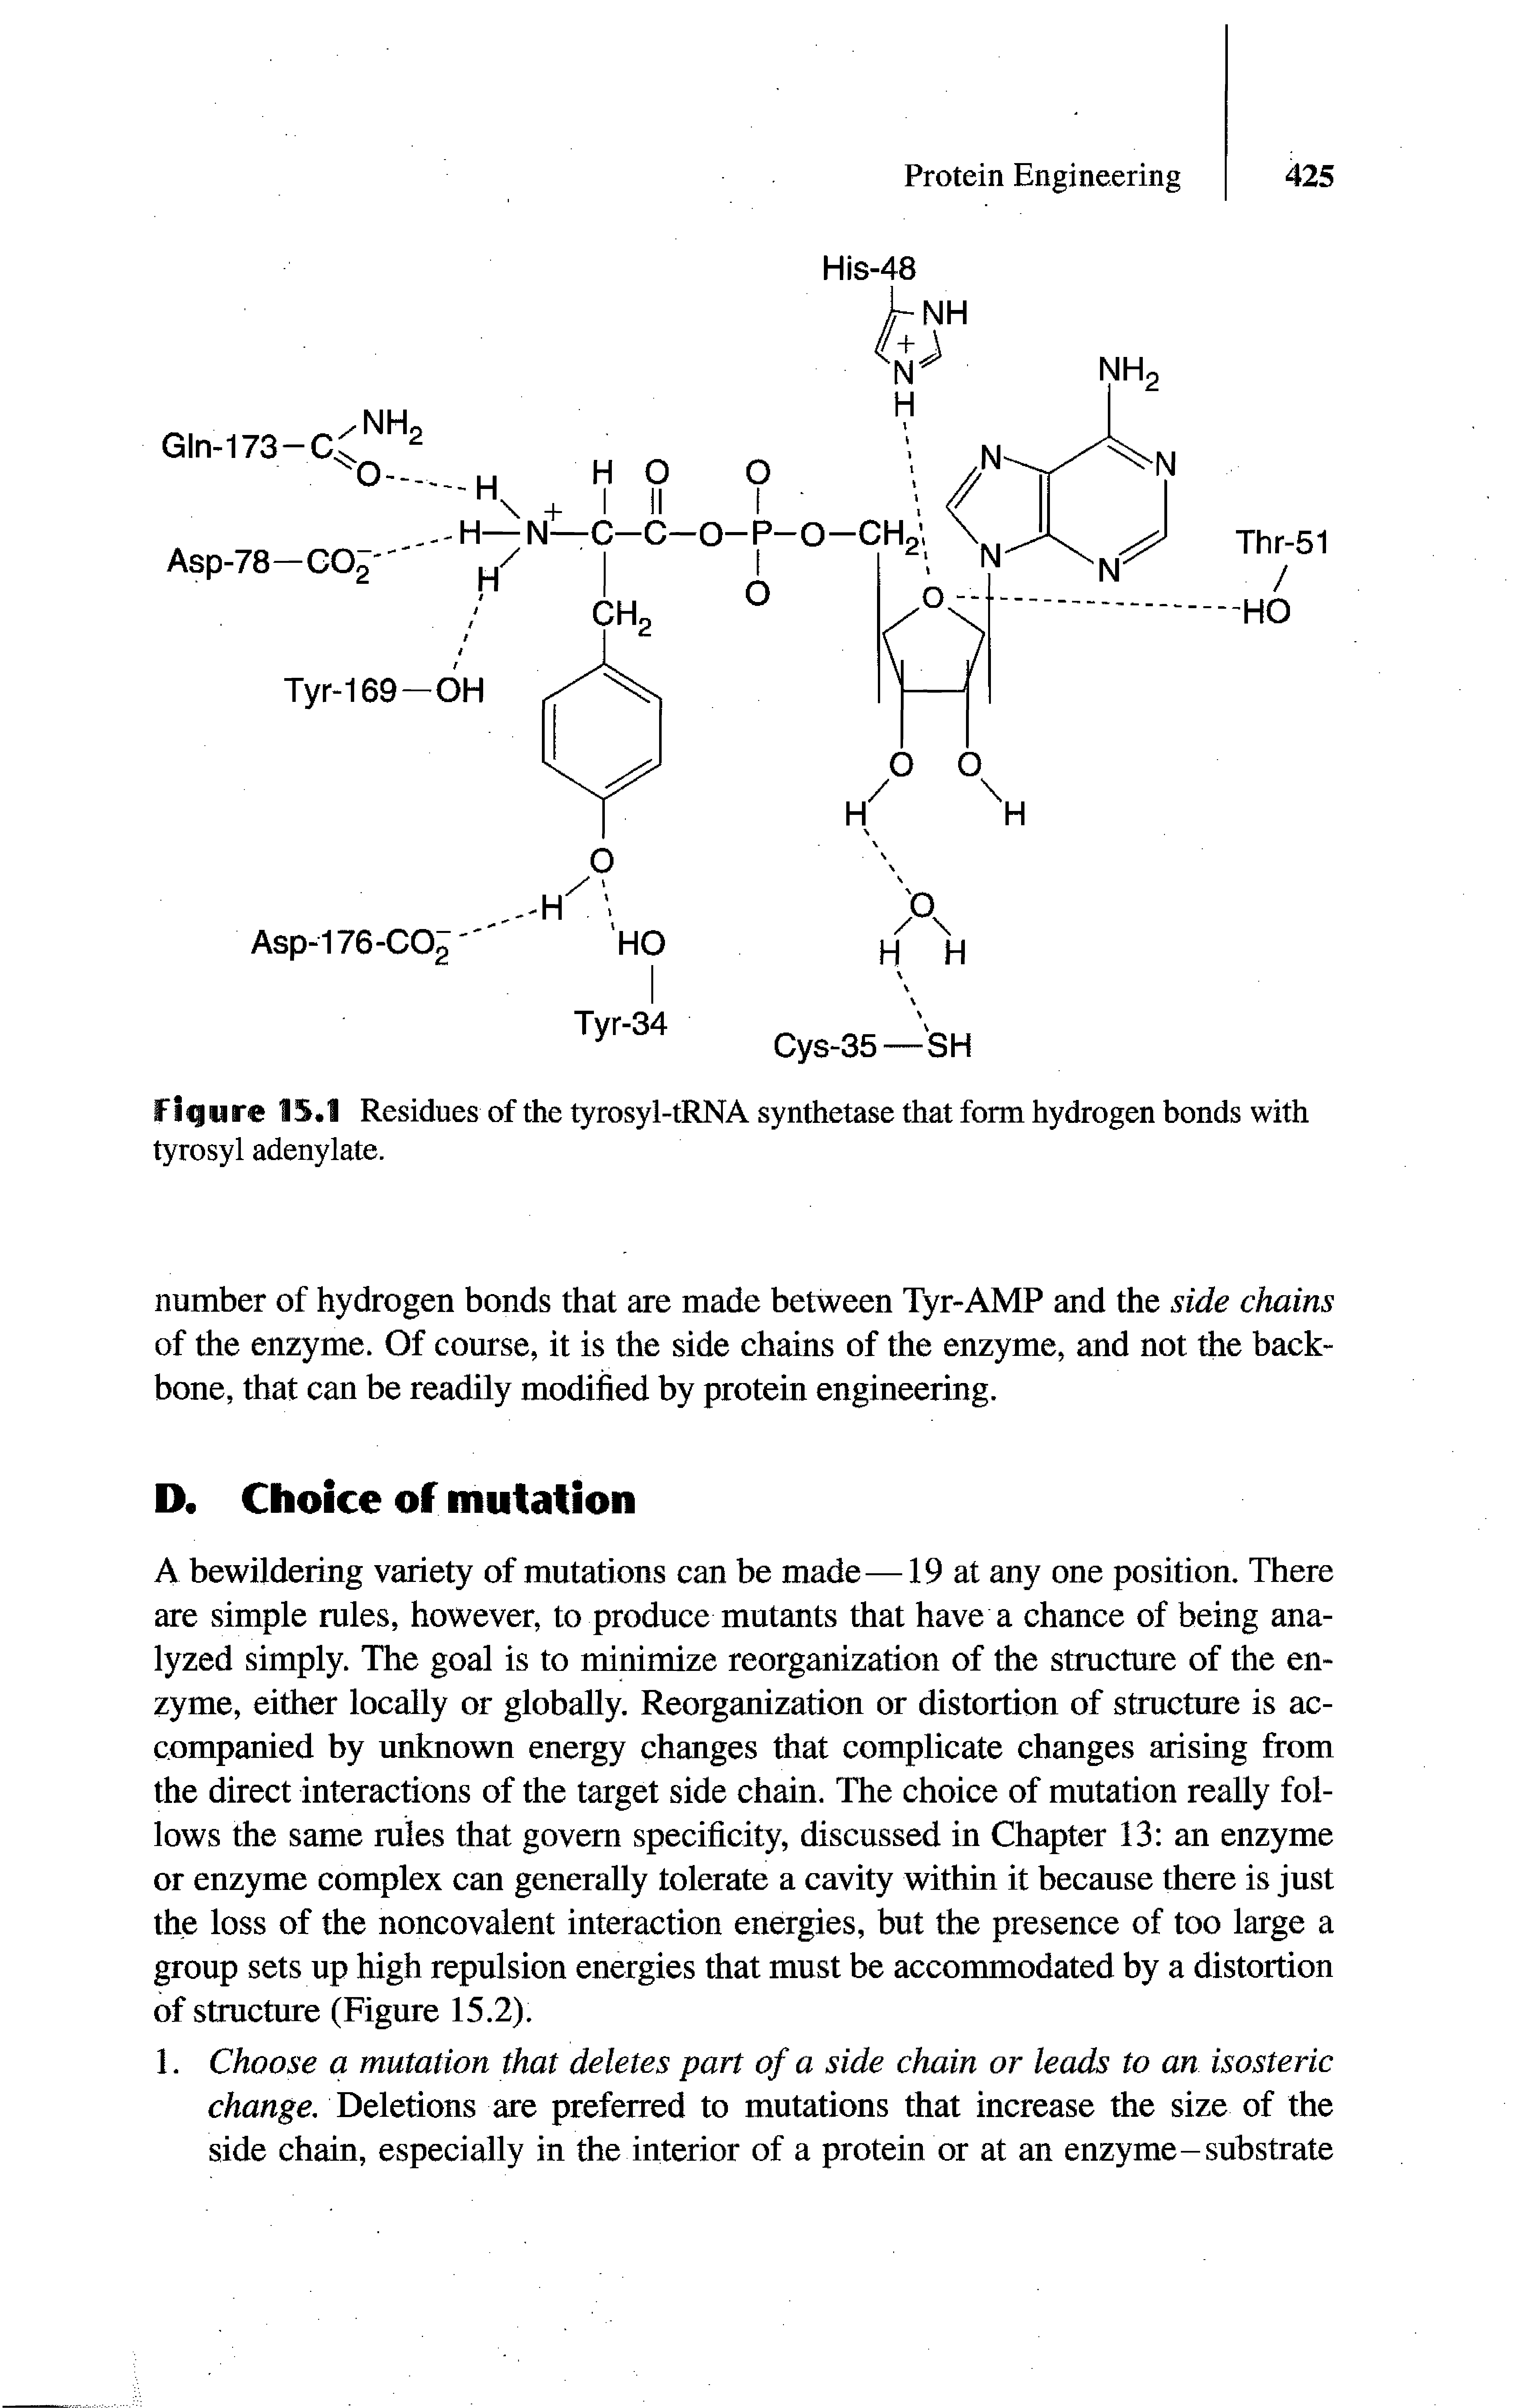 Figure 15.1 Residues of the tyrosyl-tRNA synthetase that form hydrogen bonds with tyrosyl adenylate.